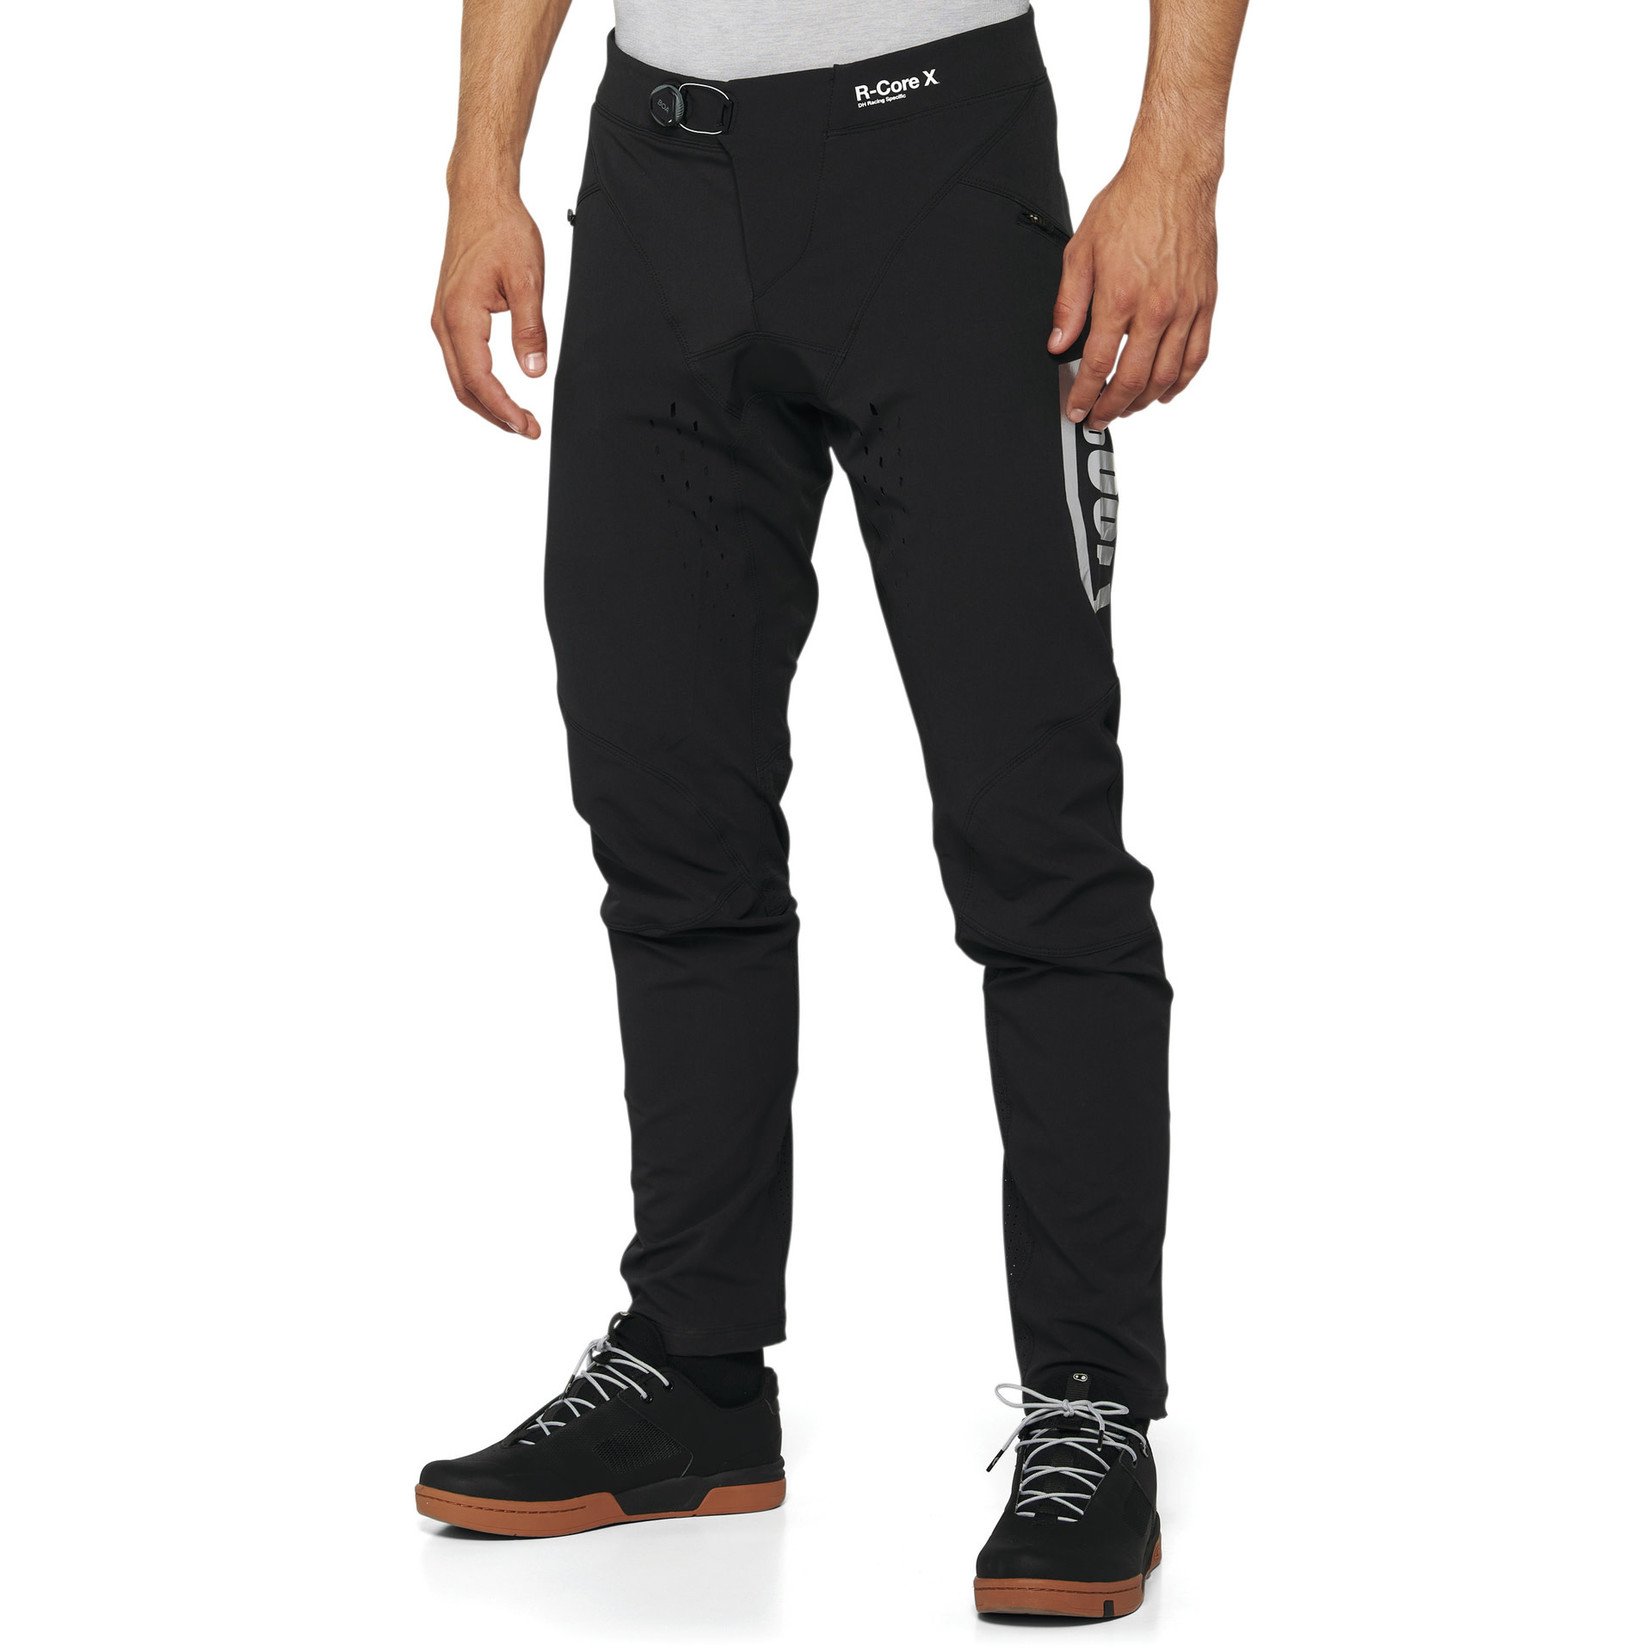 100% R-CORE X Pants - Black - St Kilda Cycles